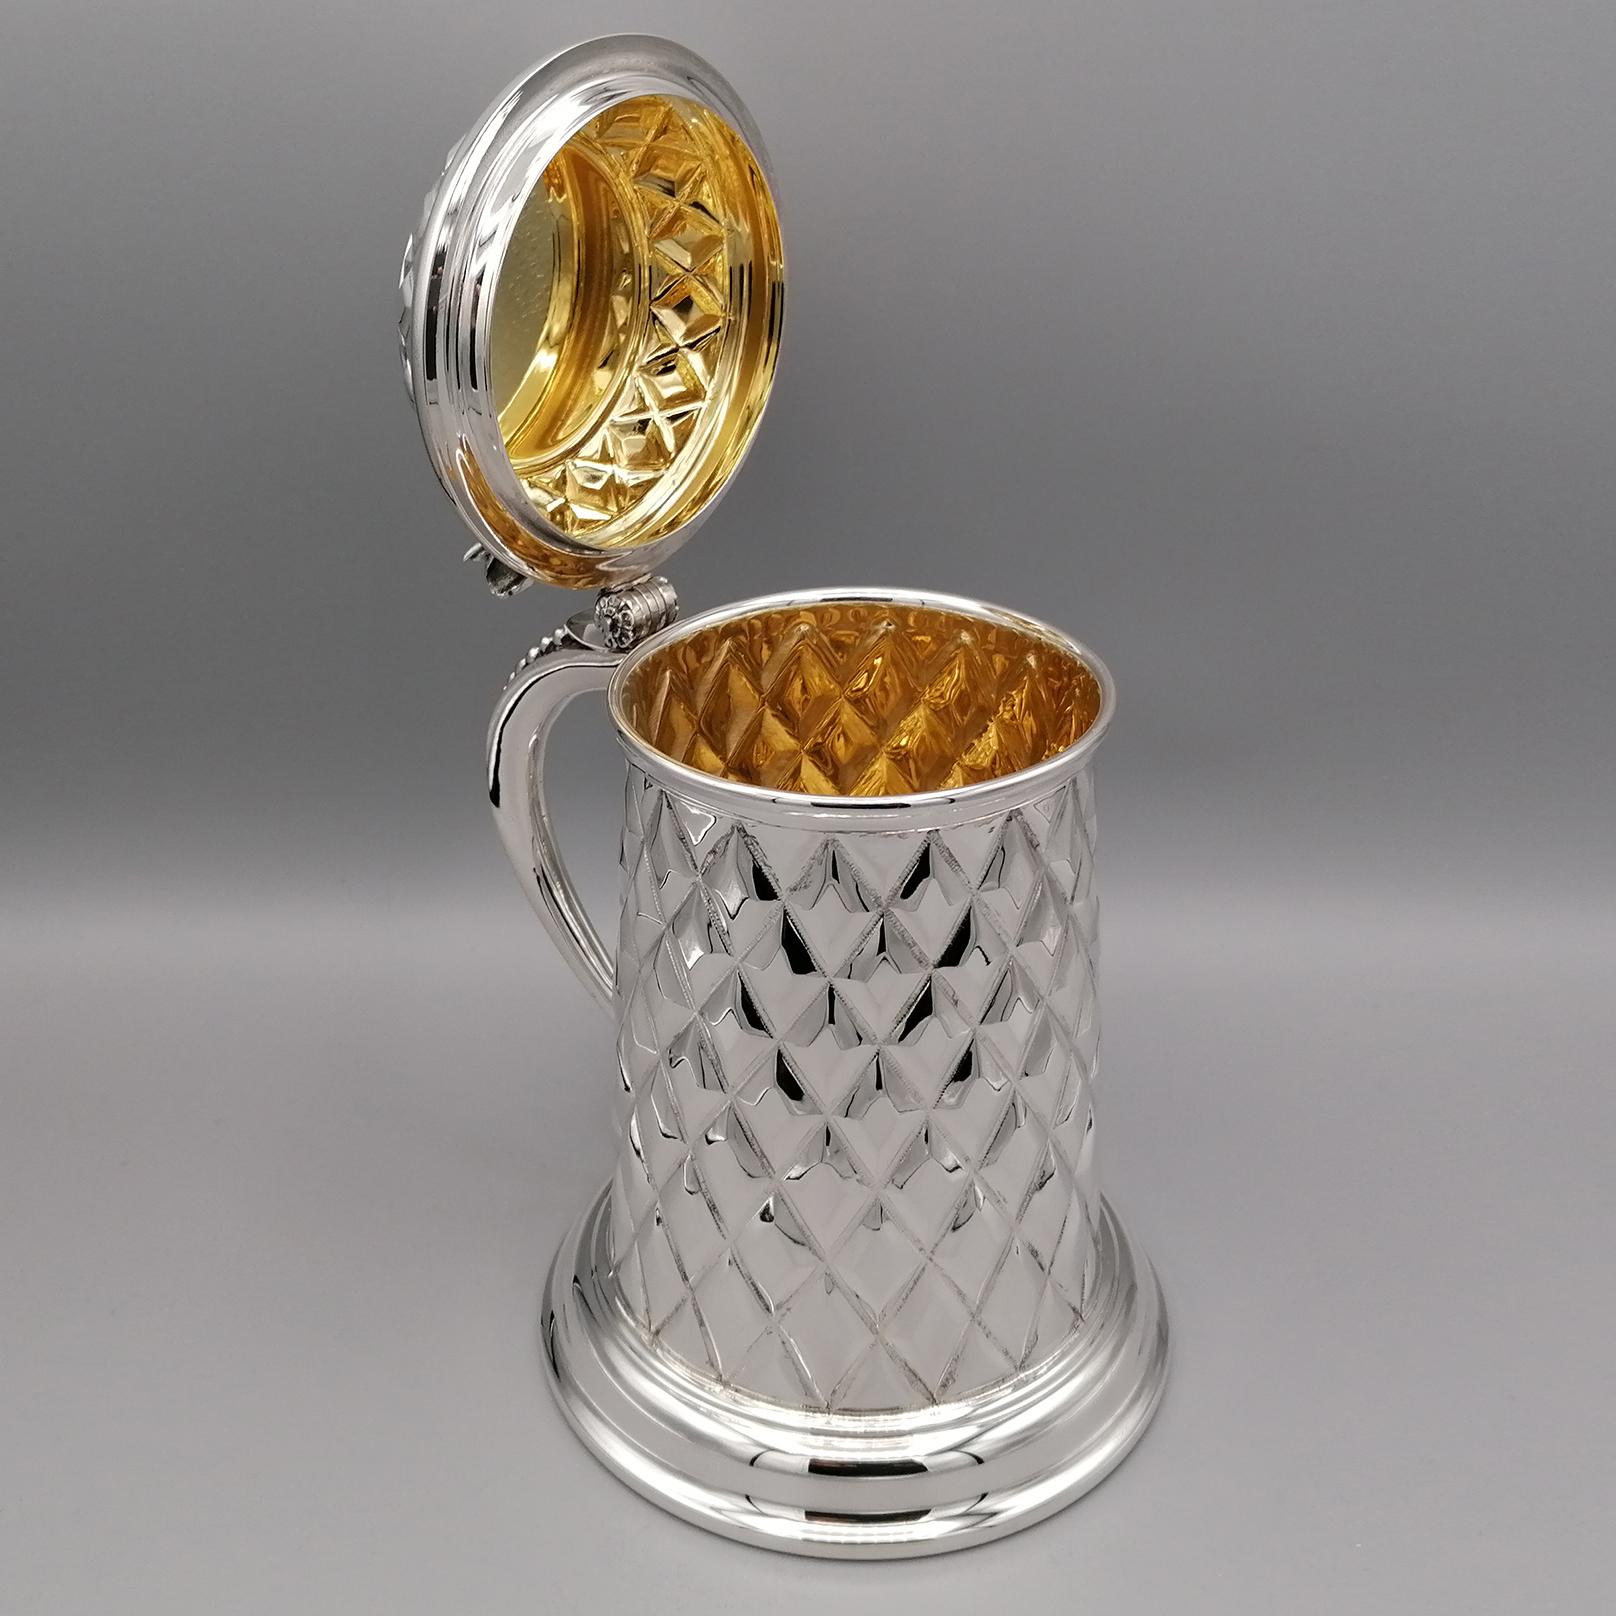 20th Century Italian Silver Tarkard, worked as Italian artisan tradition For Sale 6